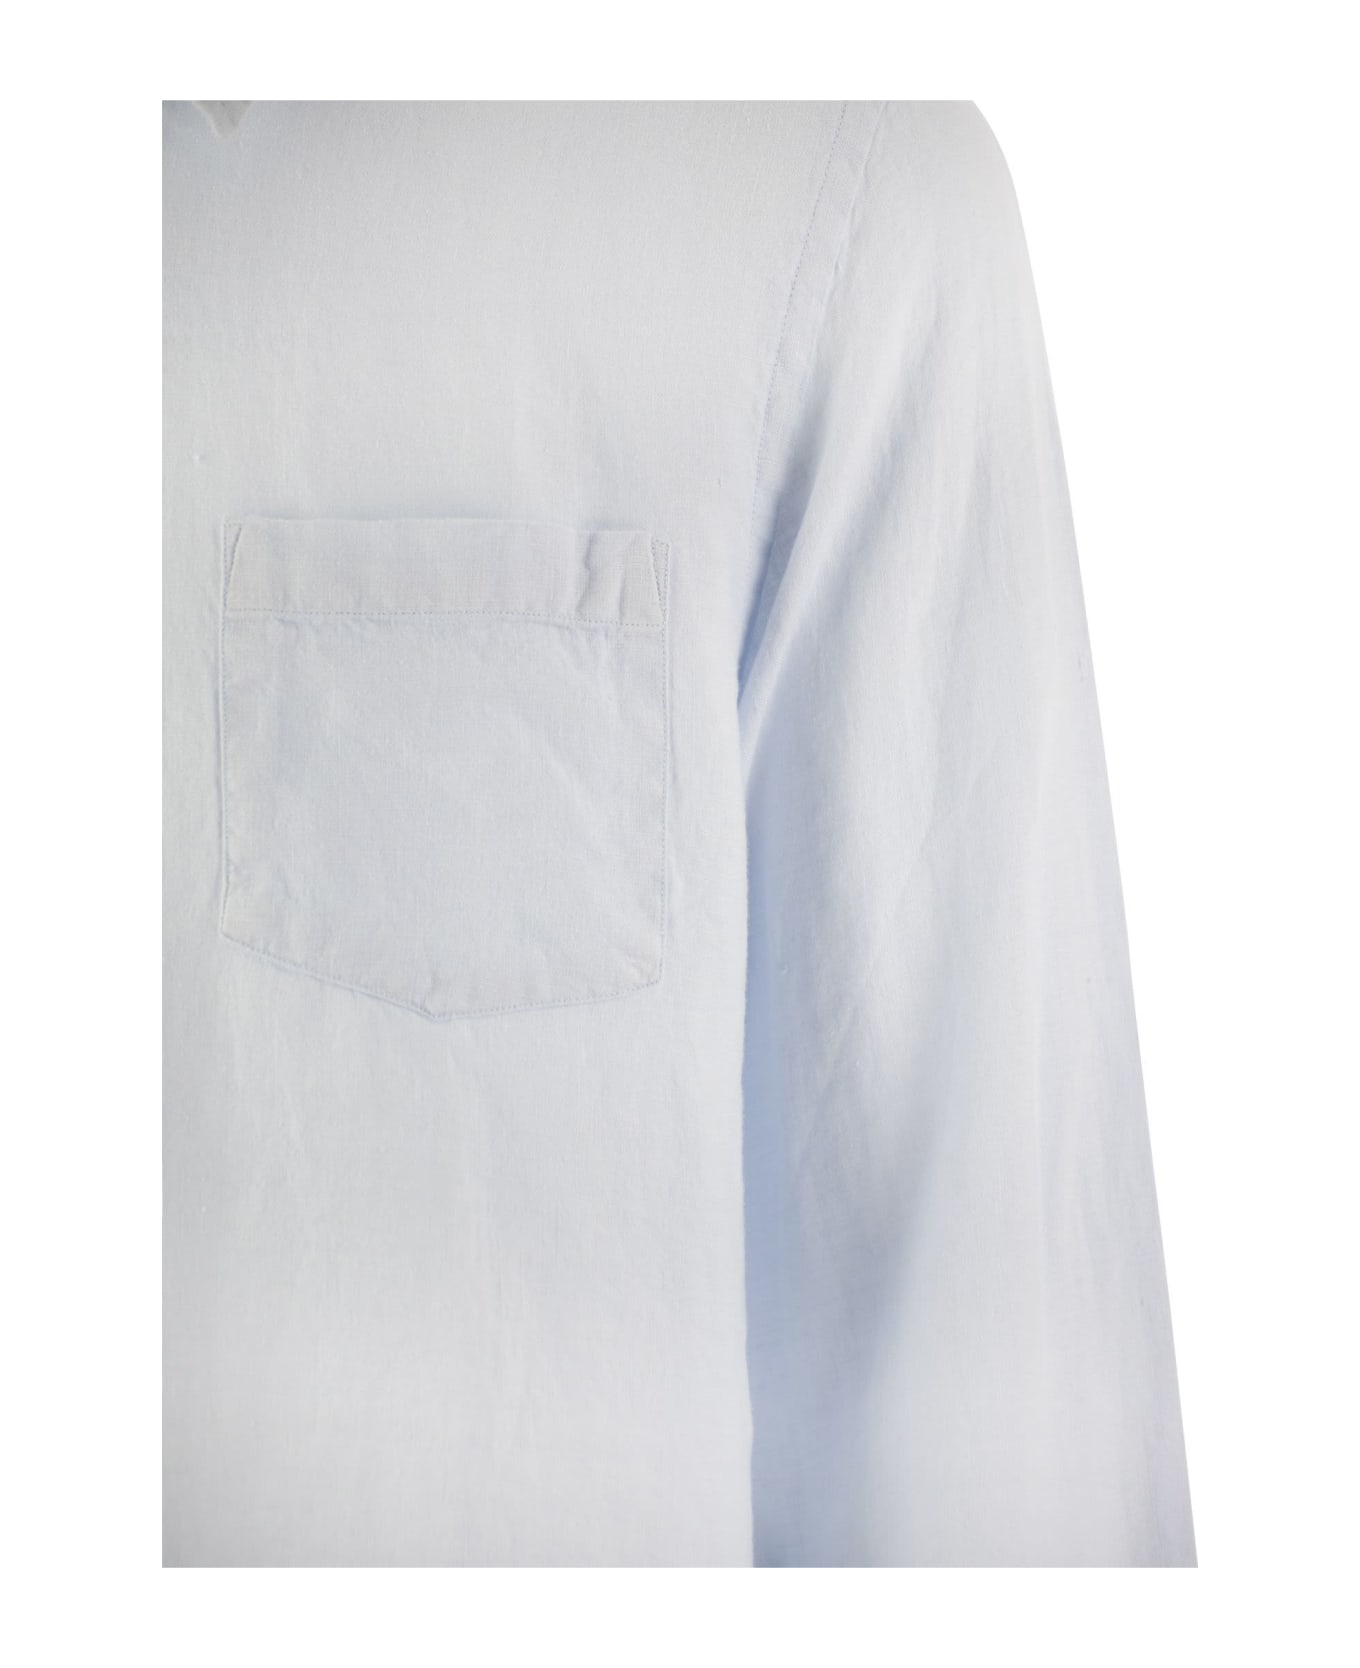 Vilebrequin Long-sleeved Linen Shirt - Sky シャツ